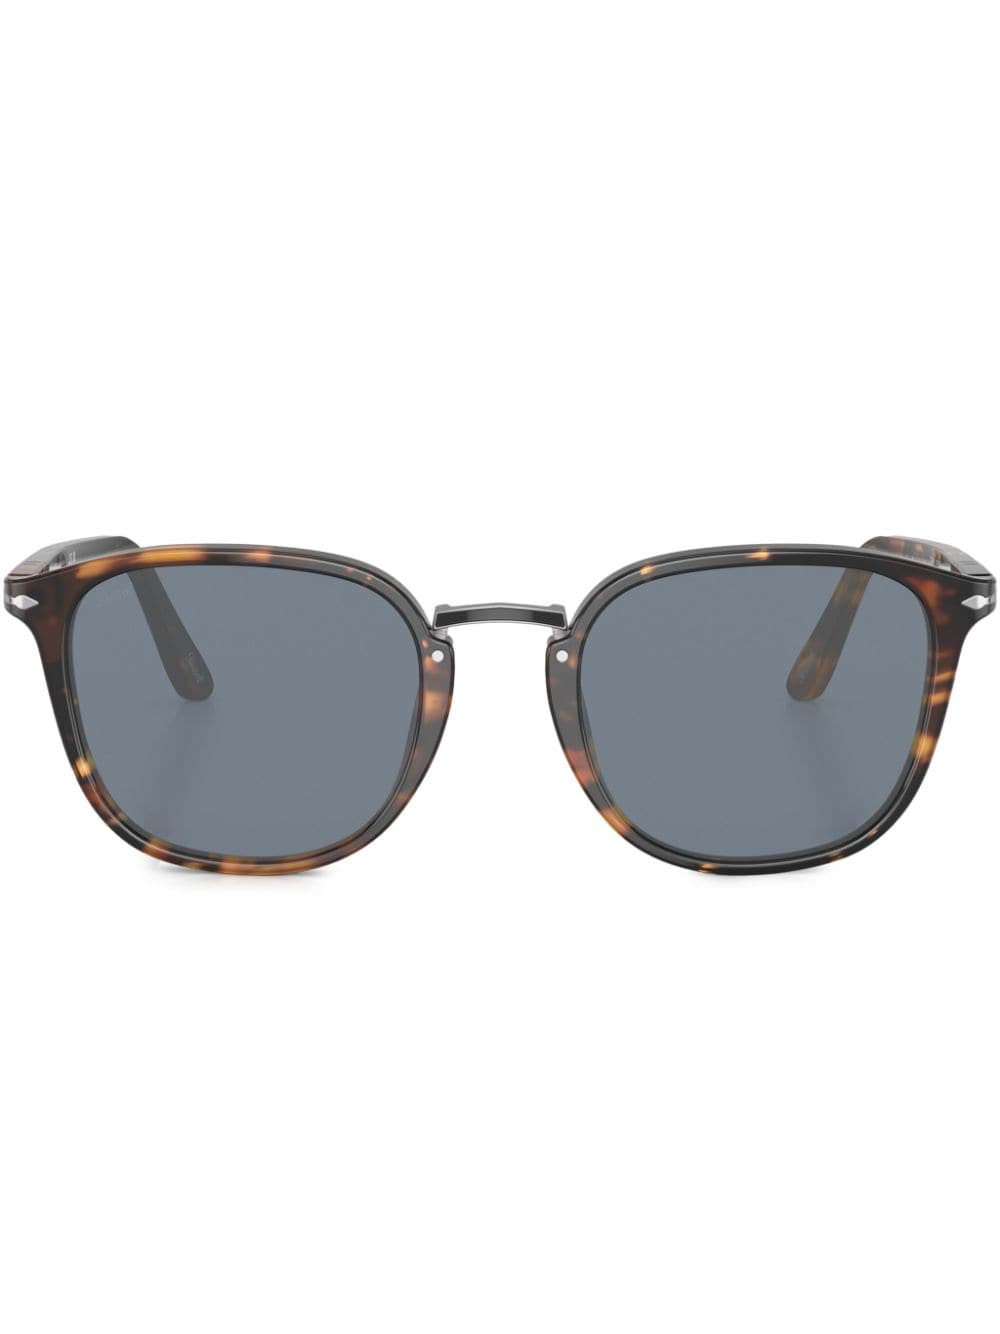 Persol tortoiseshell sunglasses - Brown von Persol